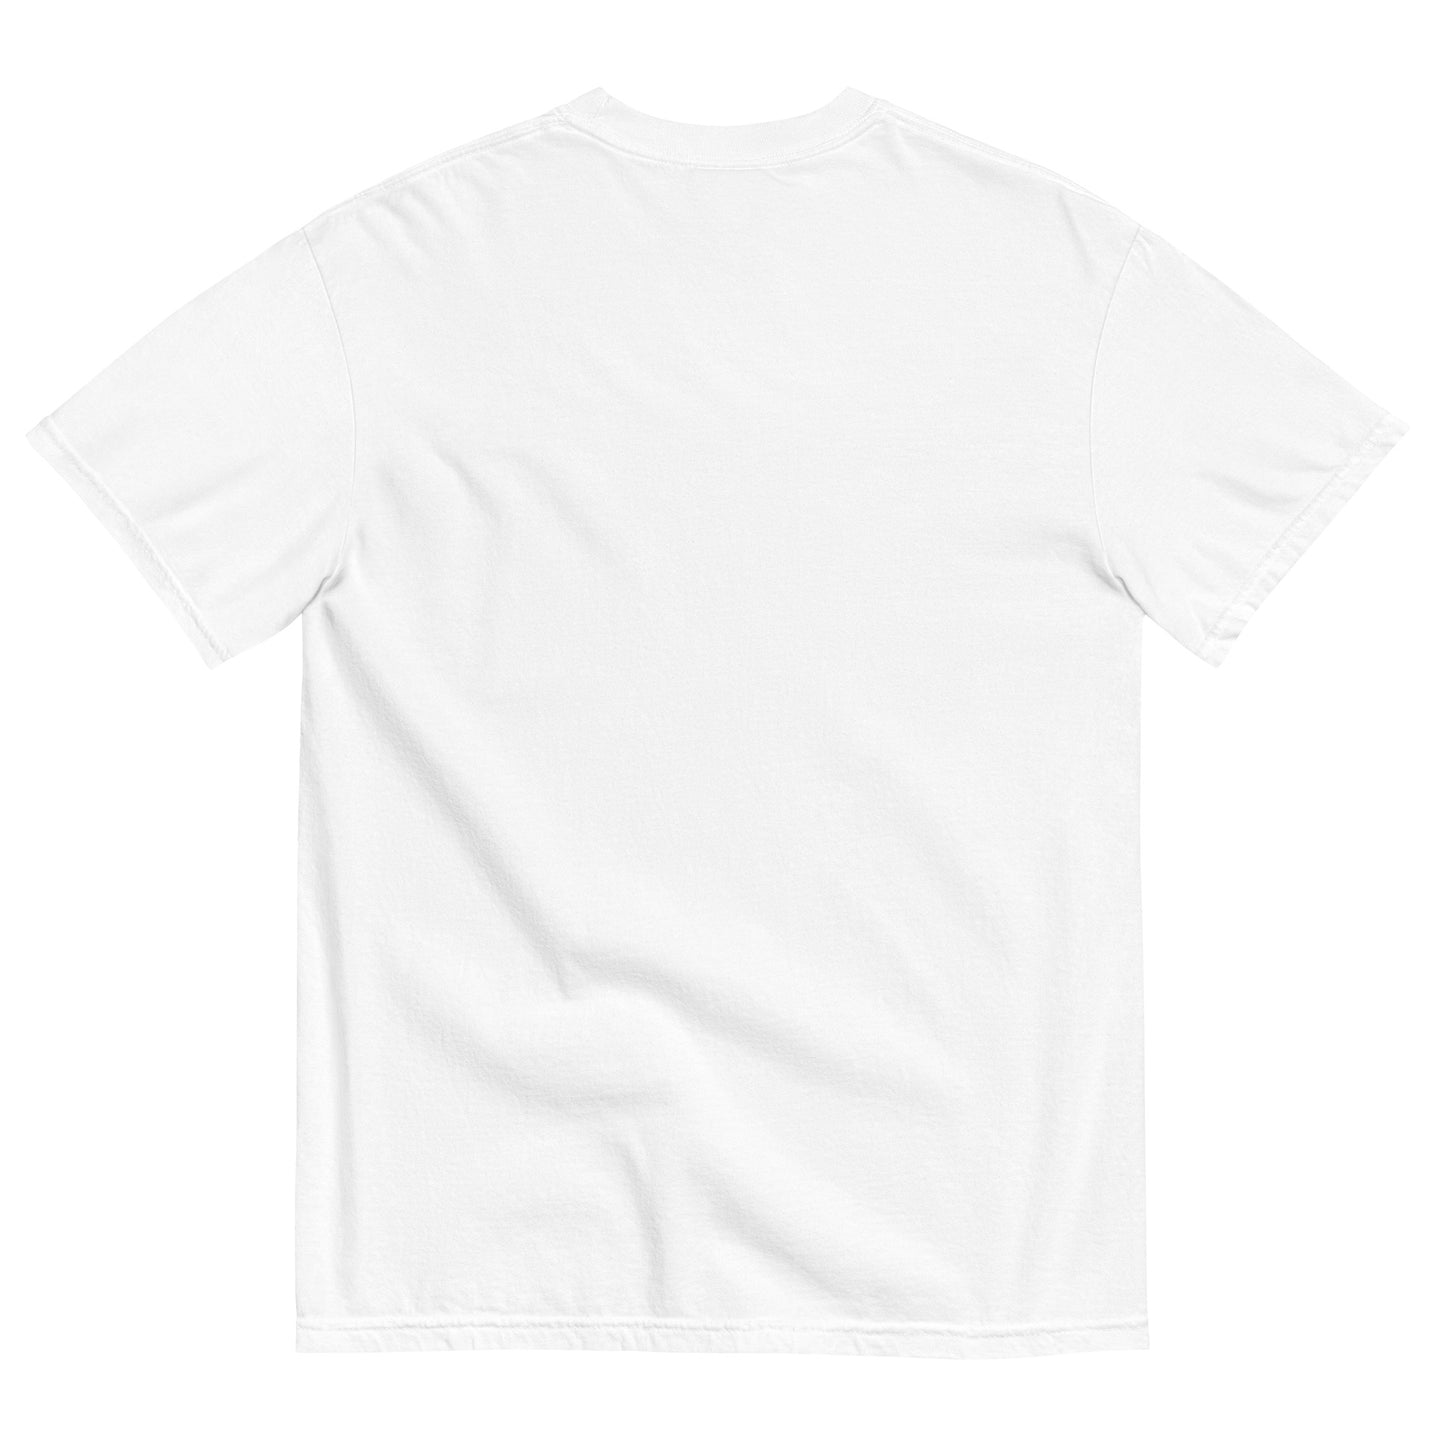 Daebak t-shirt